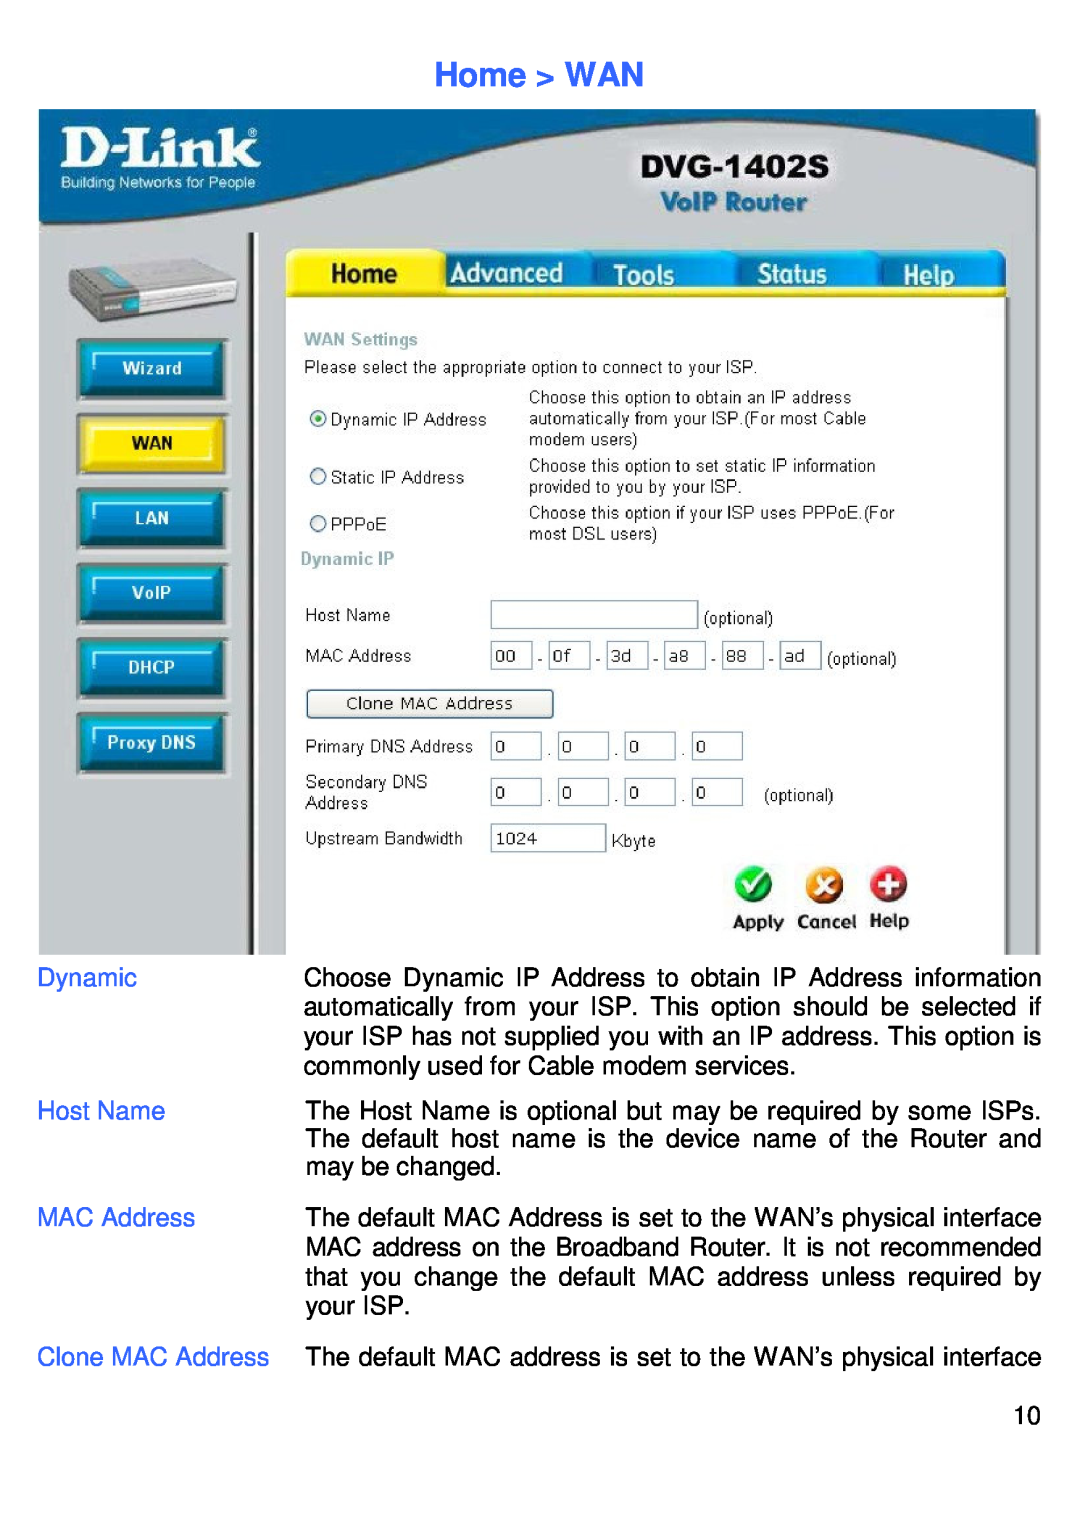 D-Link DVG-1402S manual Home WAN, Dynamic, Host Name, Clone MAC Address 